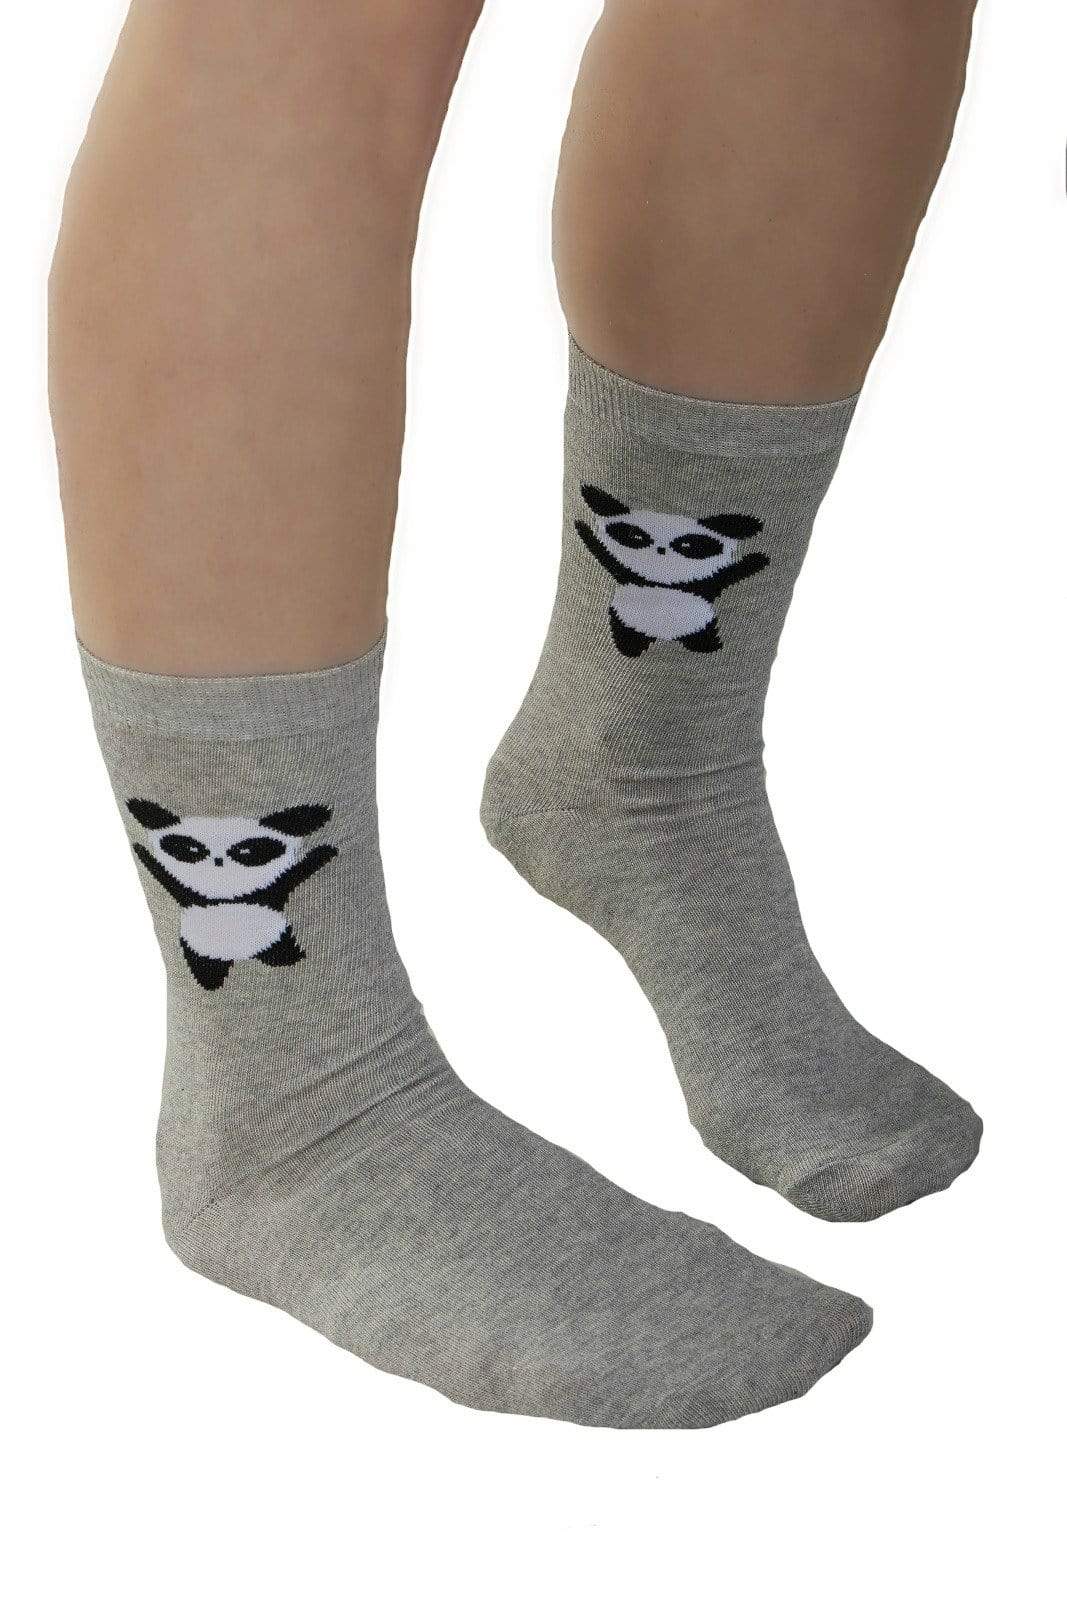 Slenderella Bed Socks Slenderella 3 Pair pack Panda Bedsocks - One Size - Pink or Grey